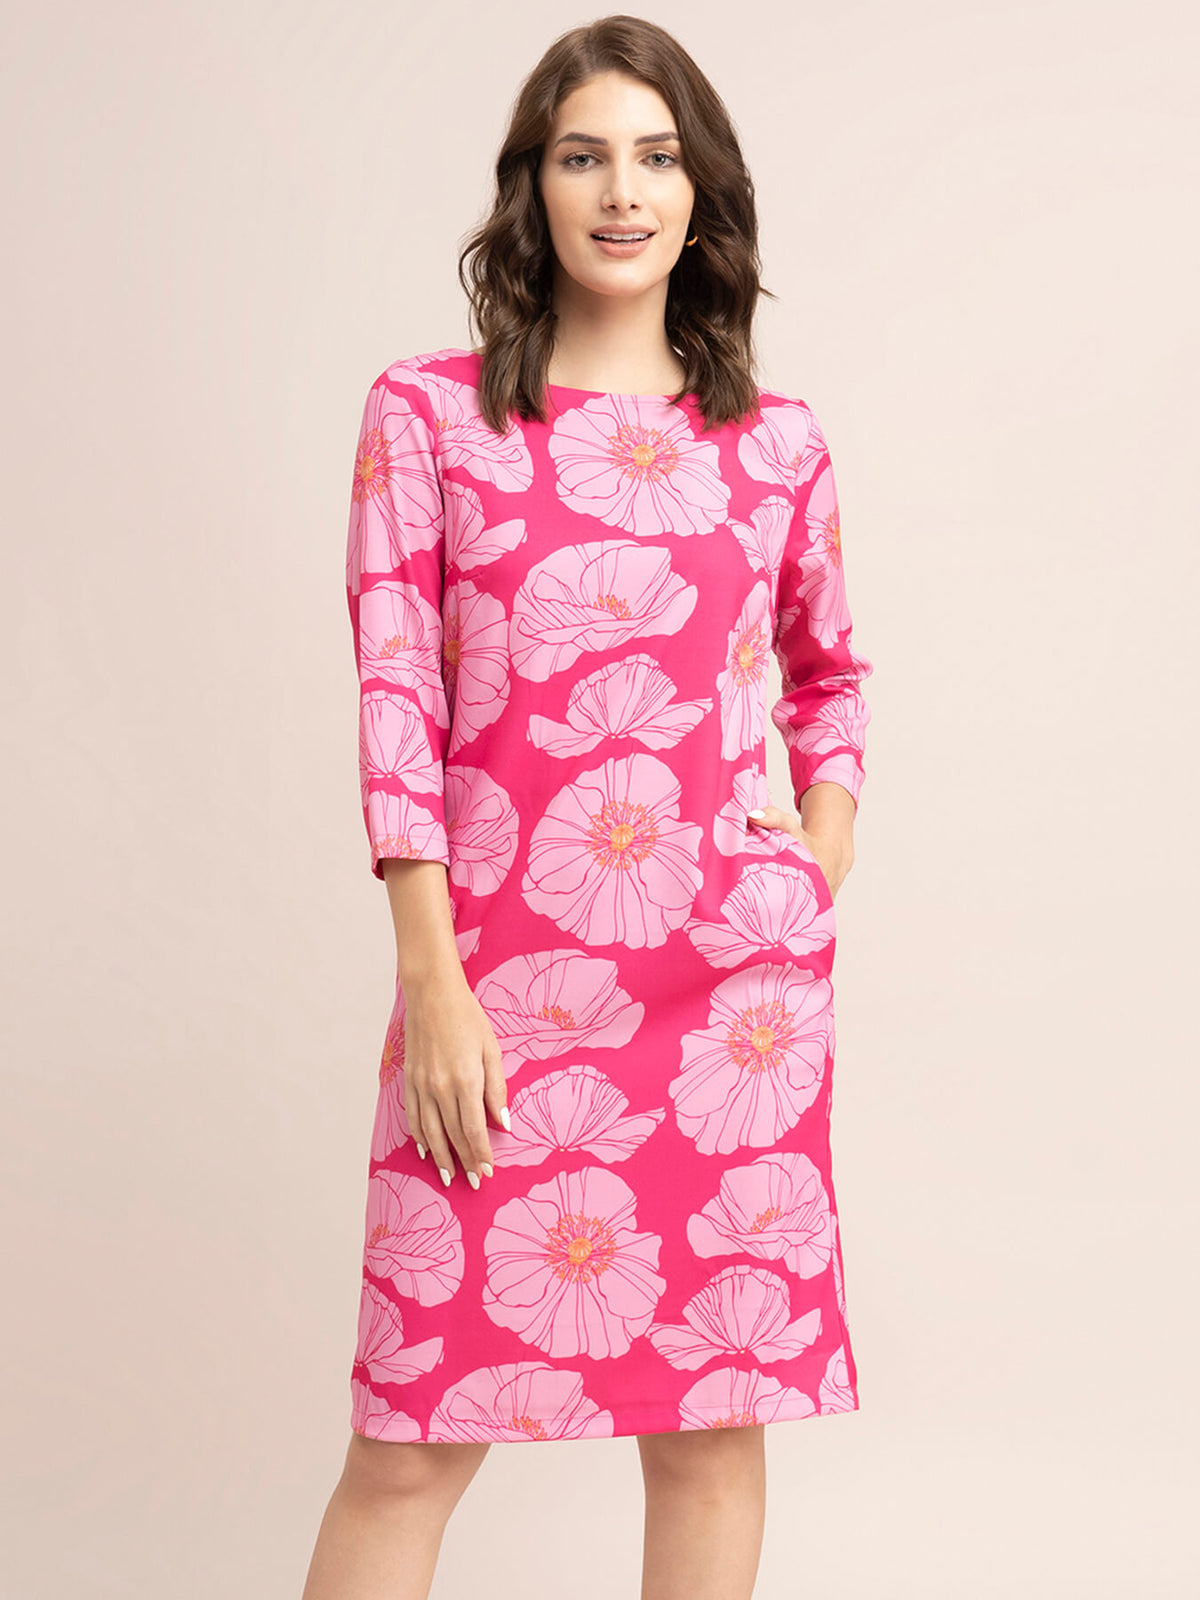 Floral Print Shift Dress - Fuchsia